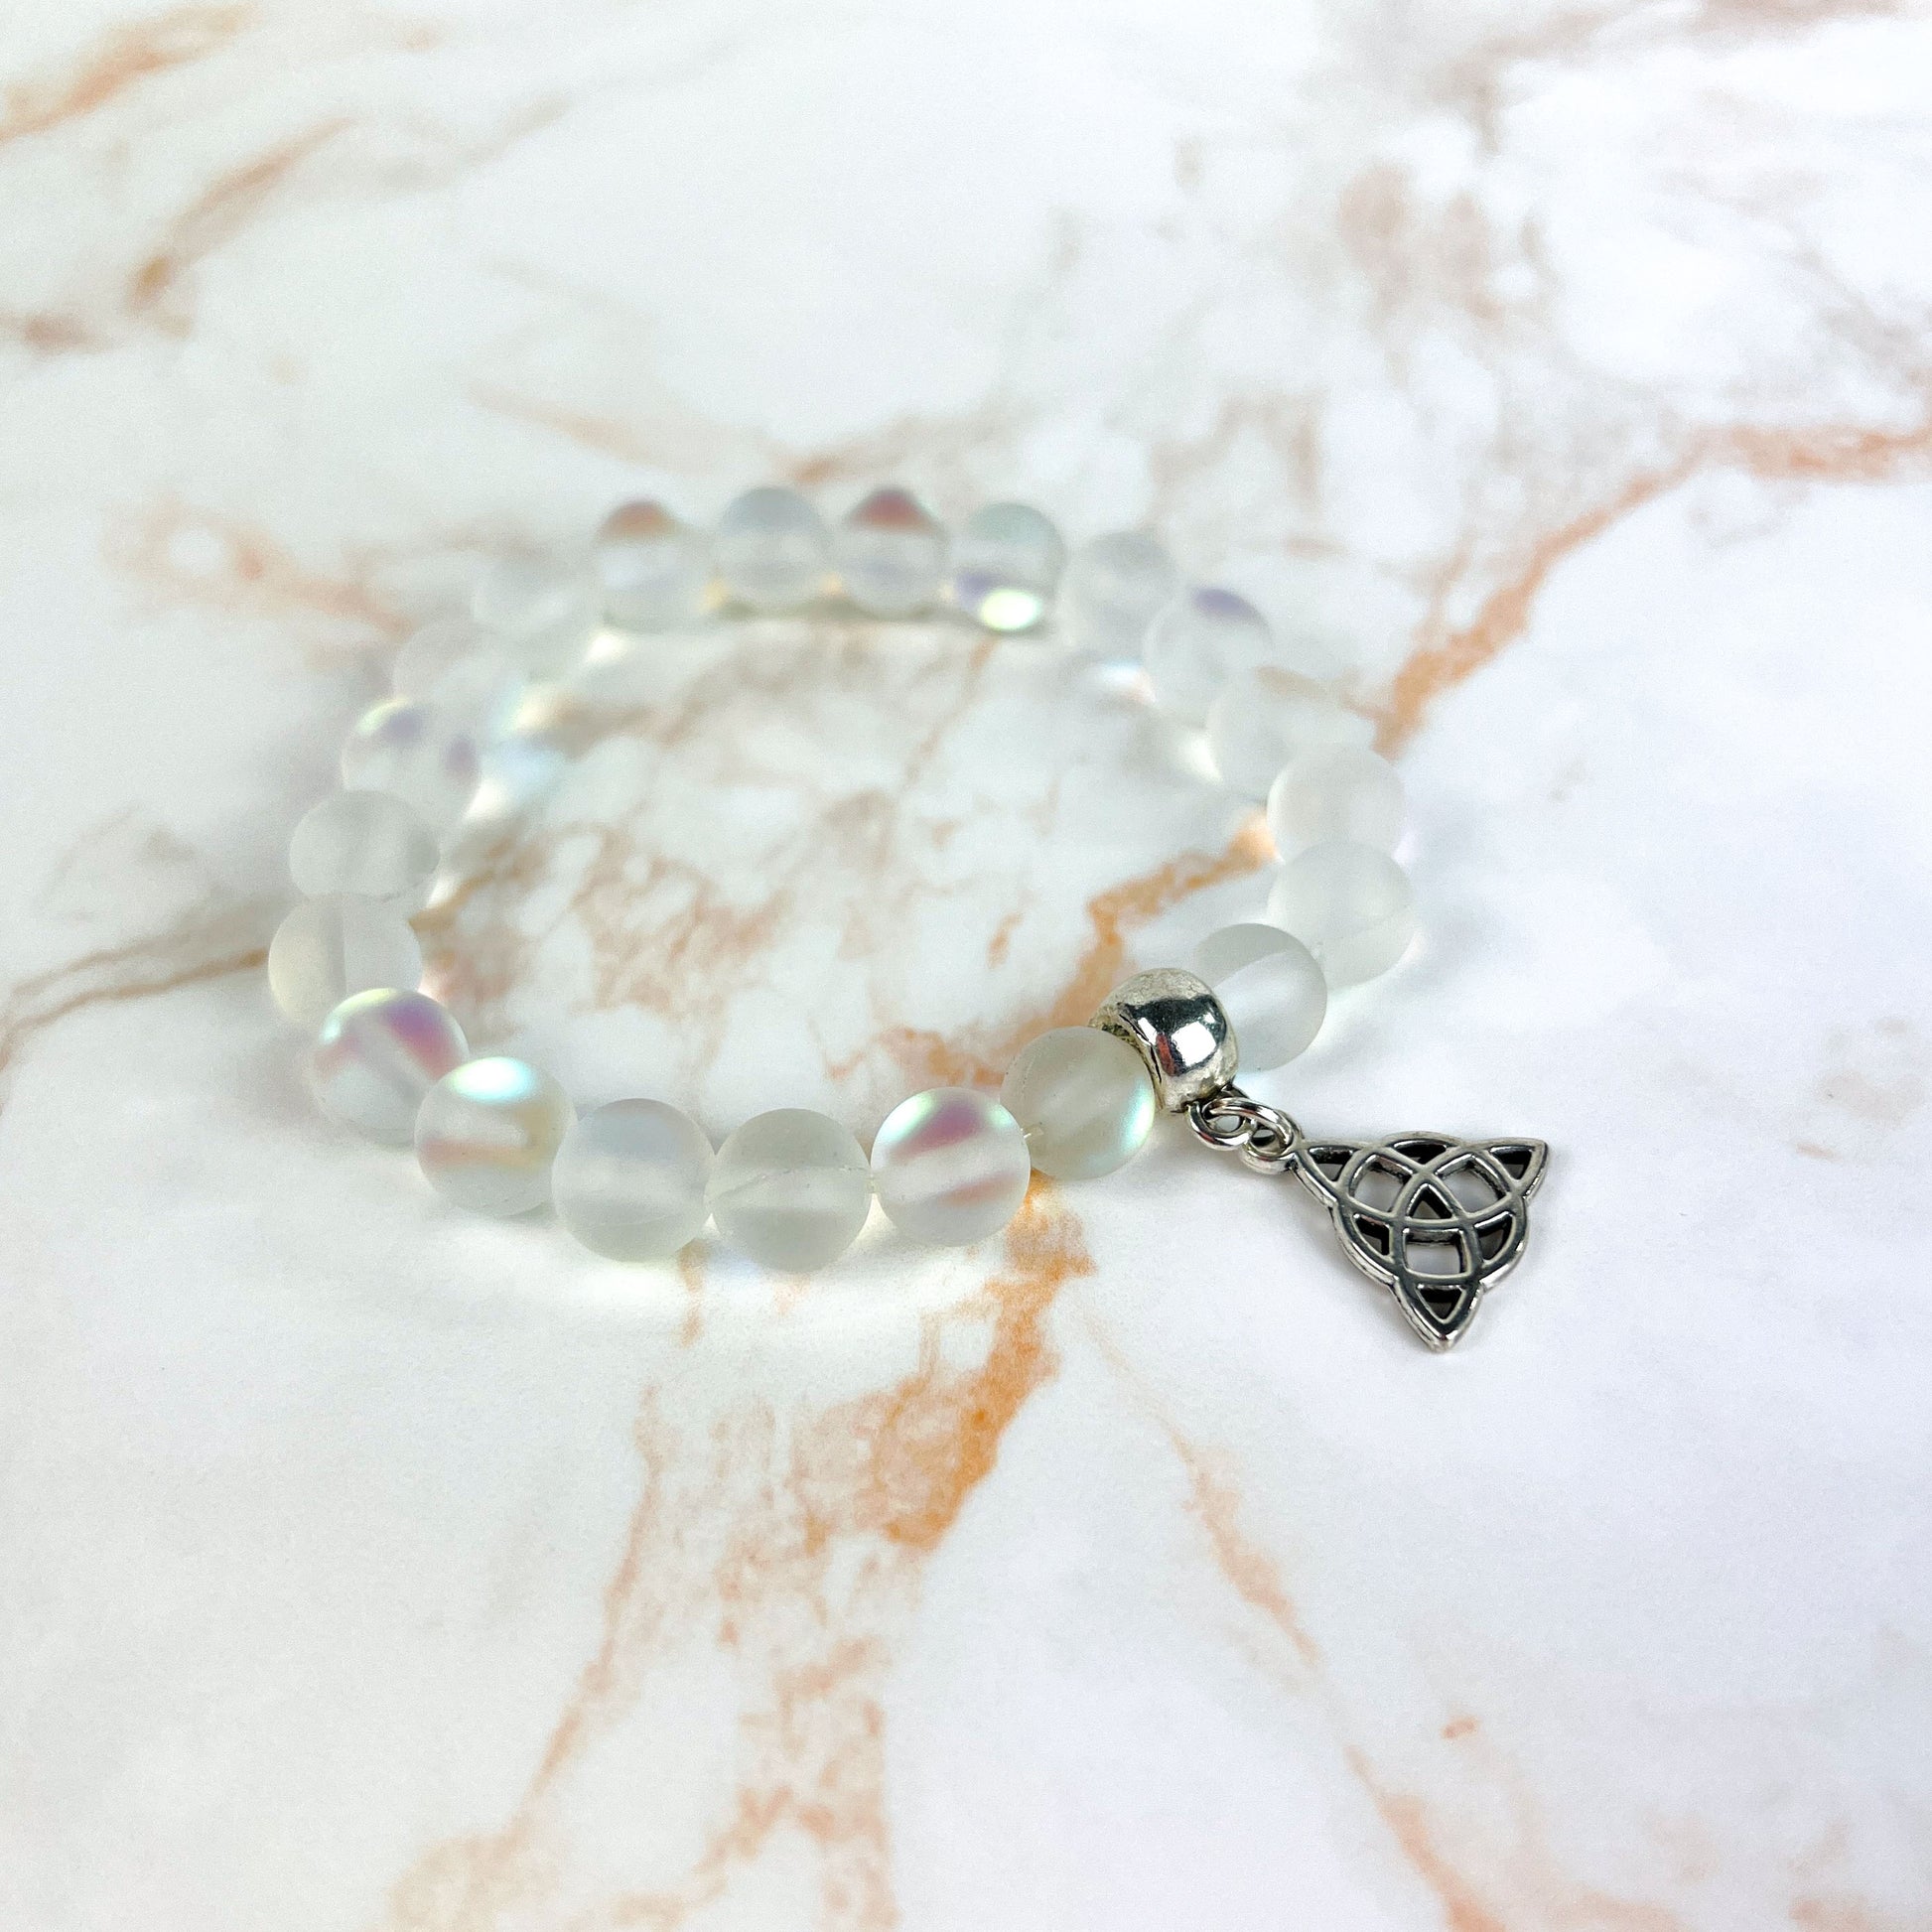 Mermaid glass mala beaded bracelet with a triquetra charm boho mystic aura beads bracelet crystal iridescent glowy bracelet